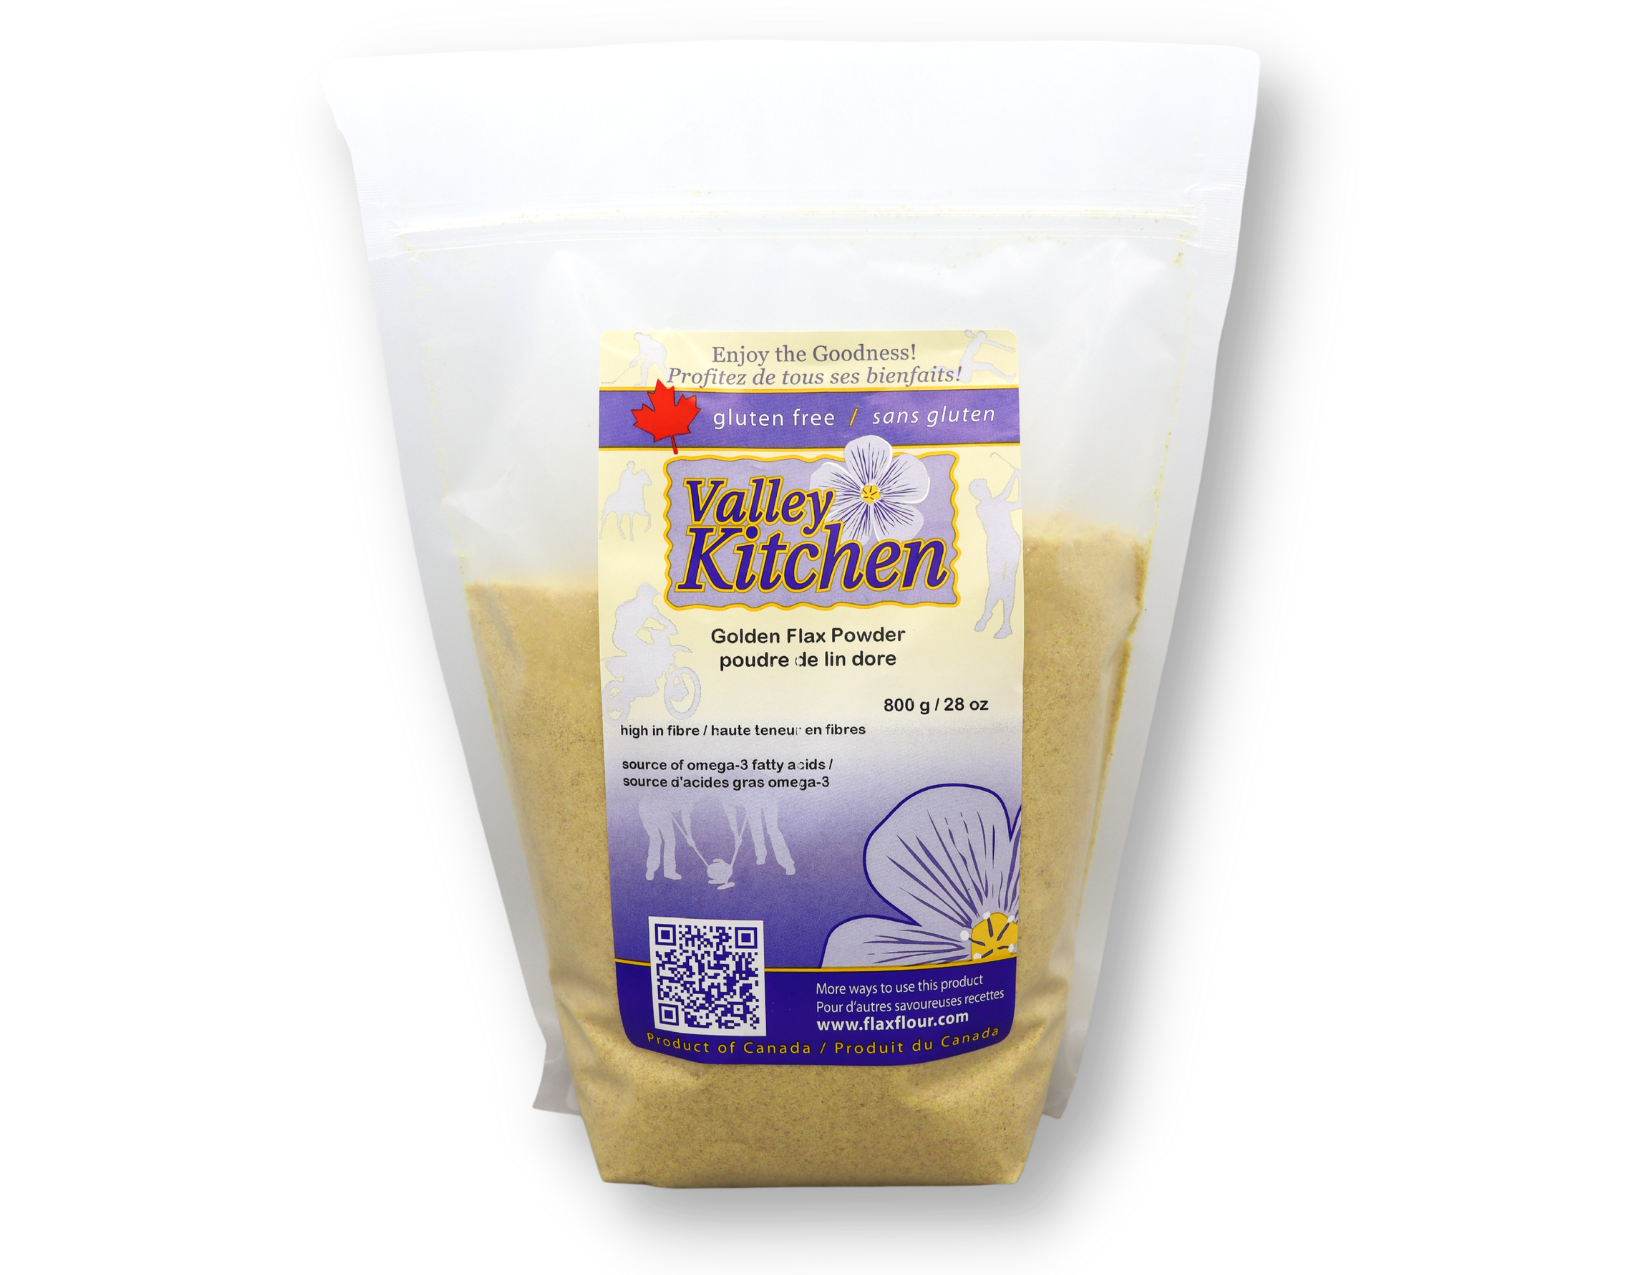 Canadian Fine Milled Organic Golden Flaxseed. Flaxseed Powder. 800g. Fibre. Protein. Omega-3. non-GMO. Gluten-Free. Nova Scotia Canada.